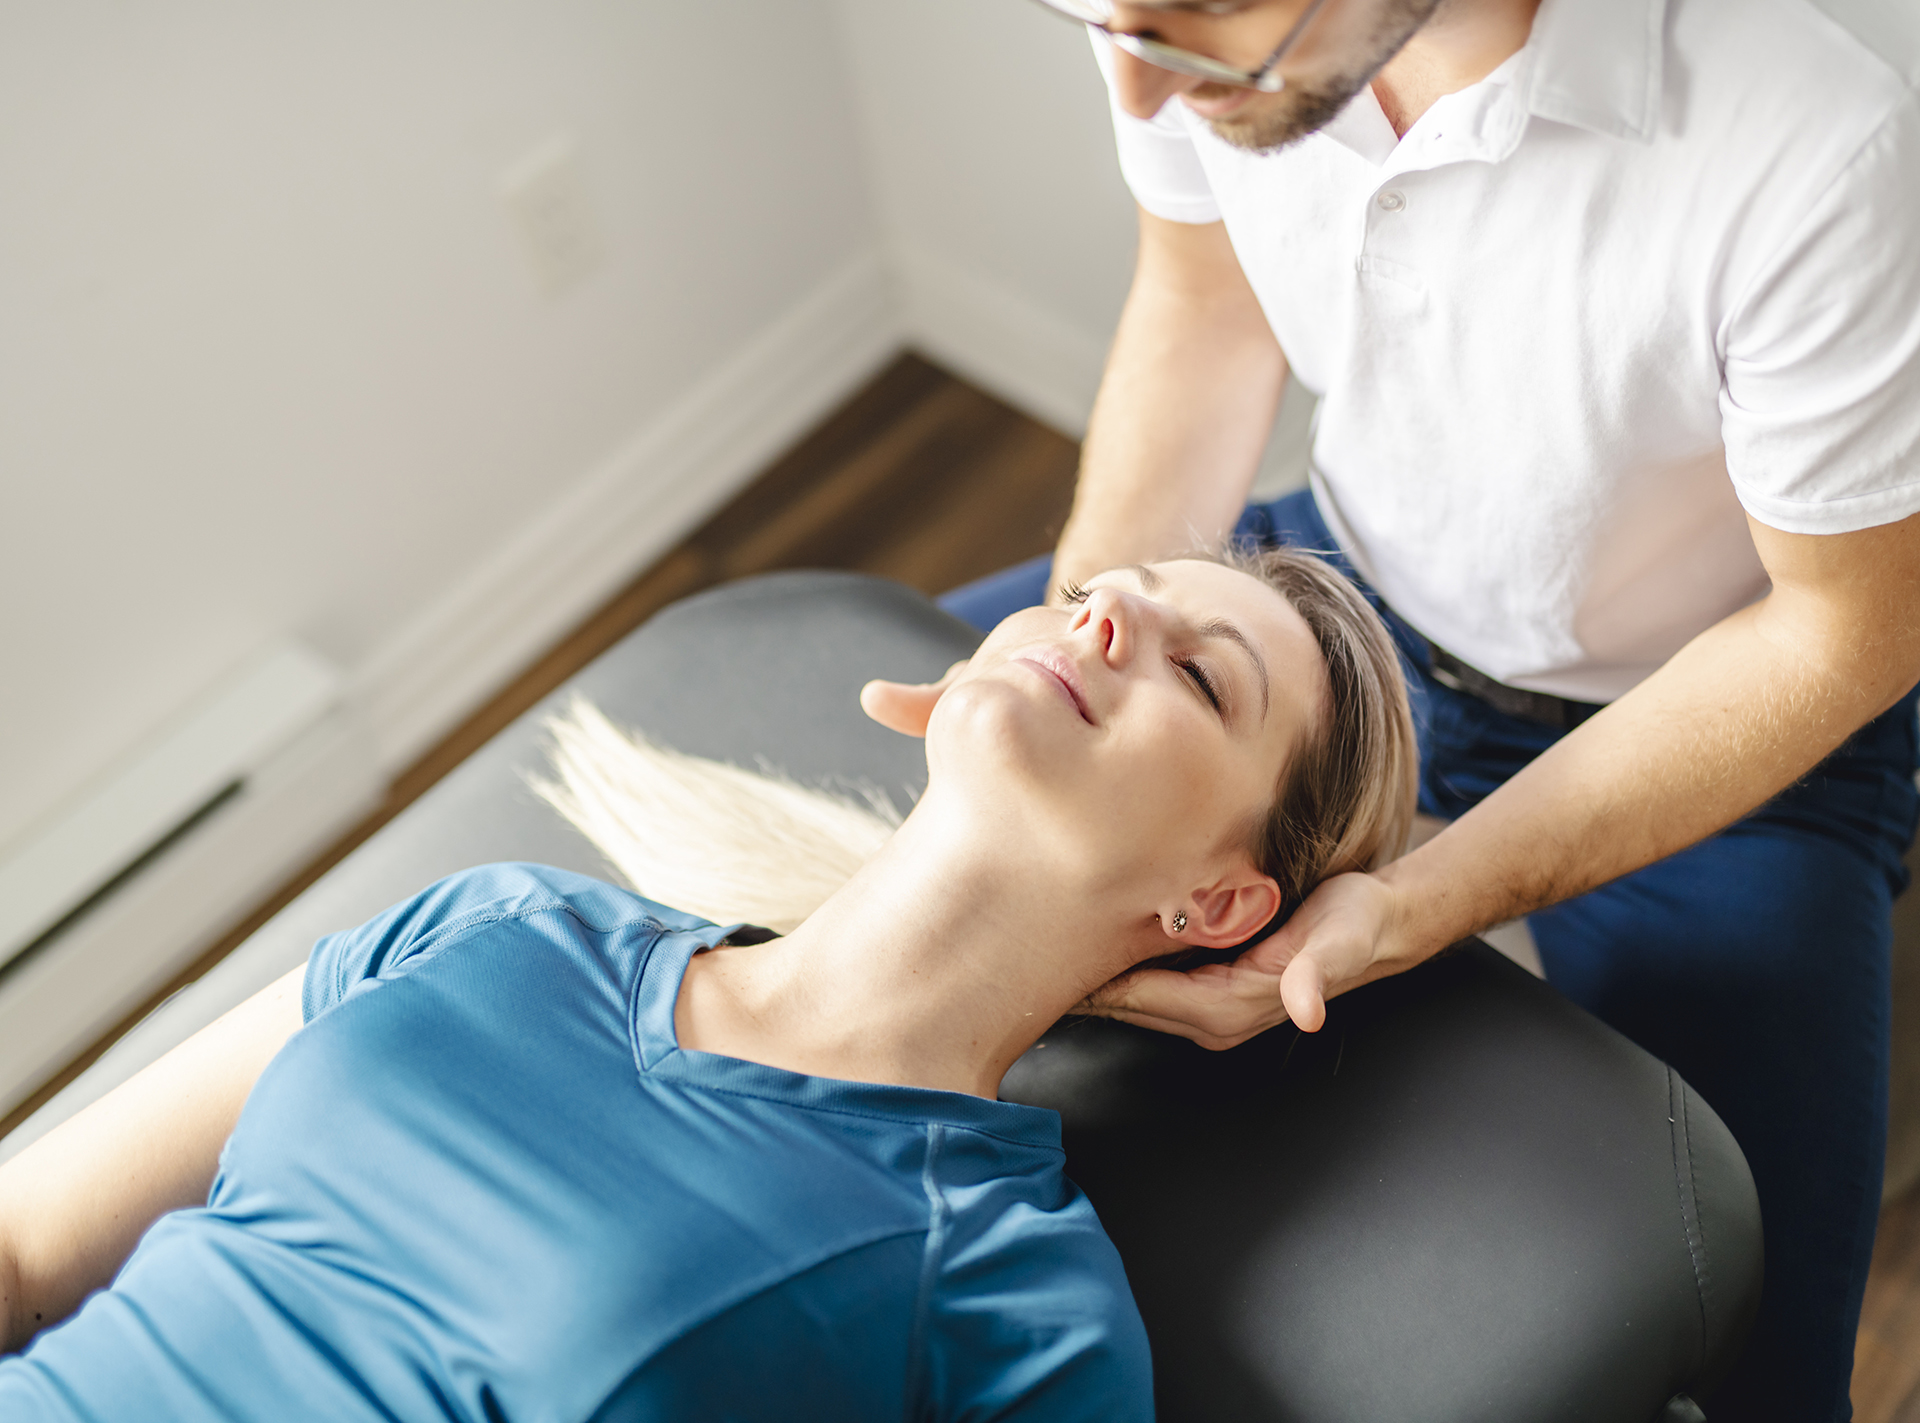 Chiropractor adjusting woman's neck